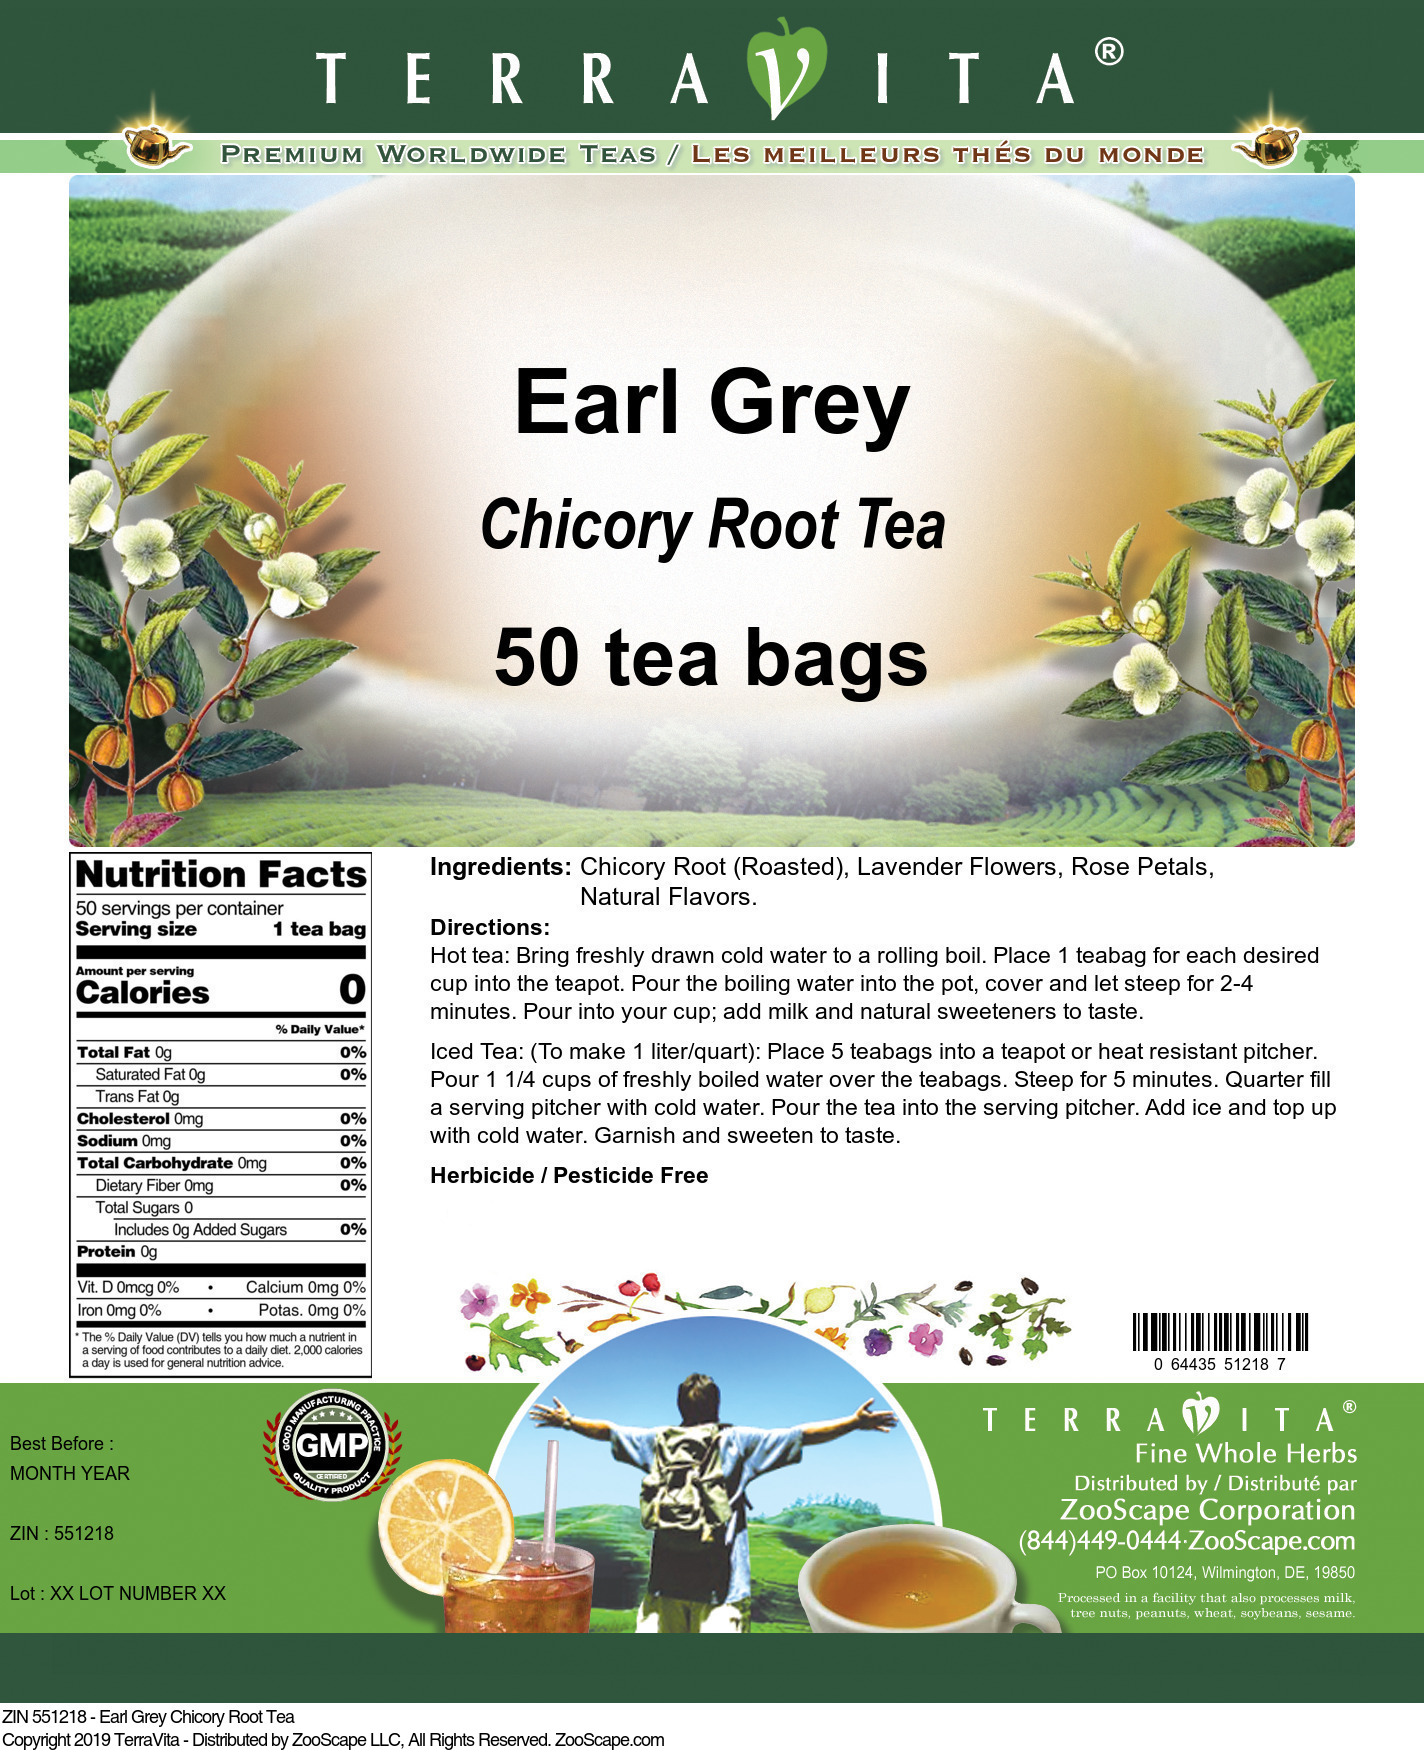 Earl Grey Chicory Root Tea - Label